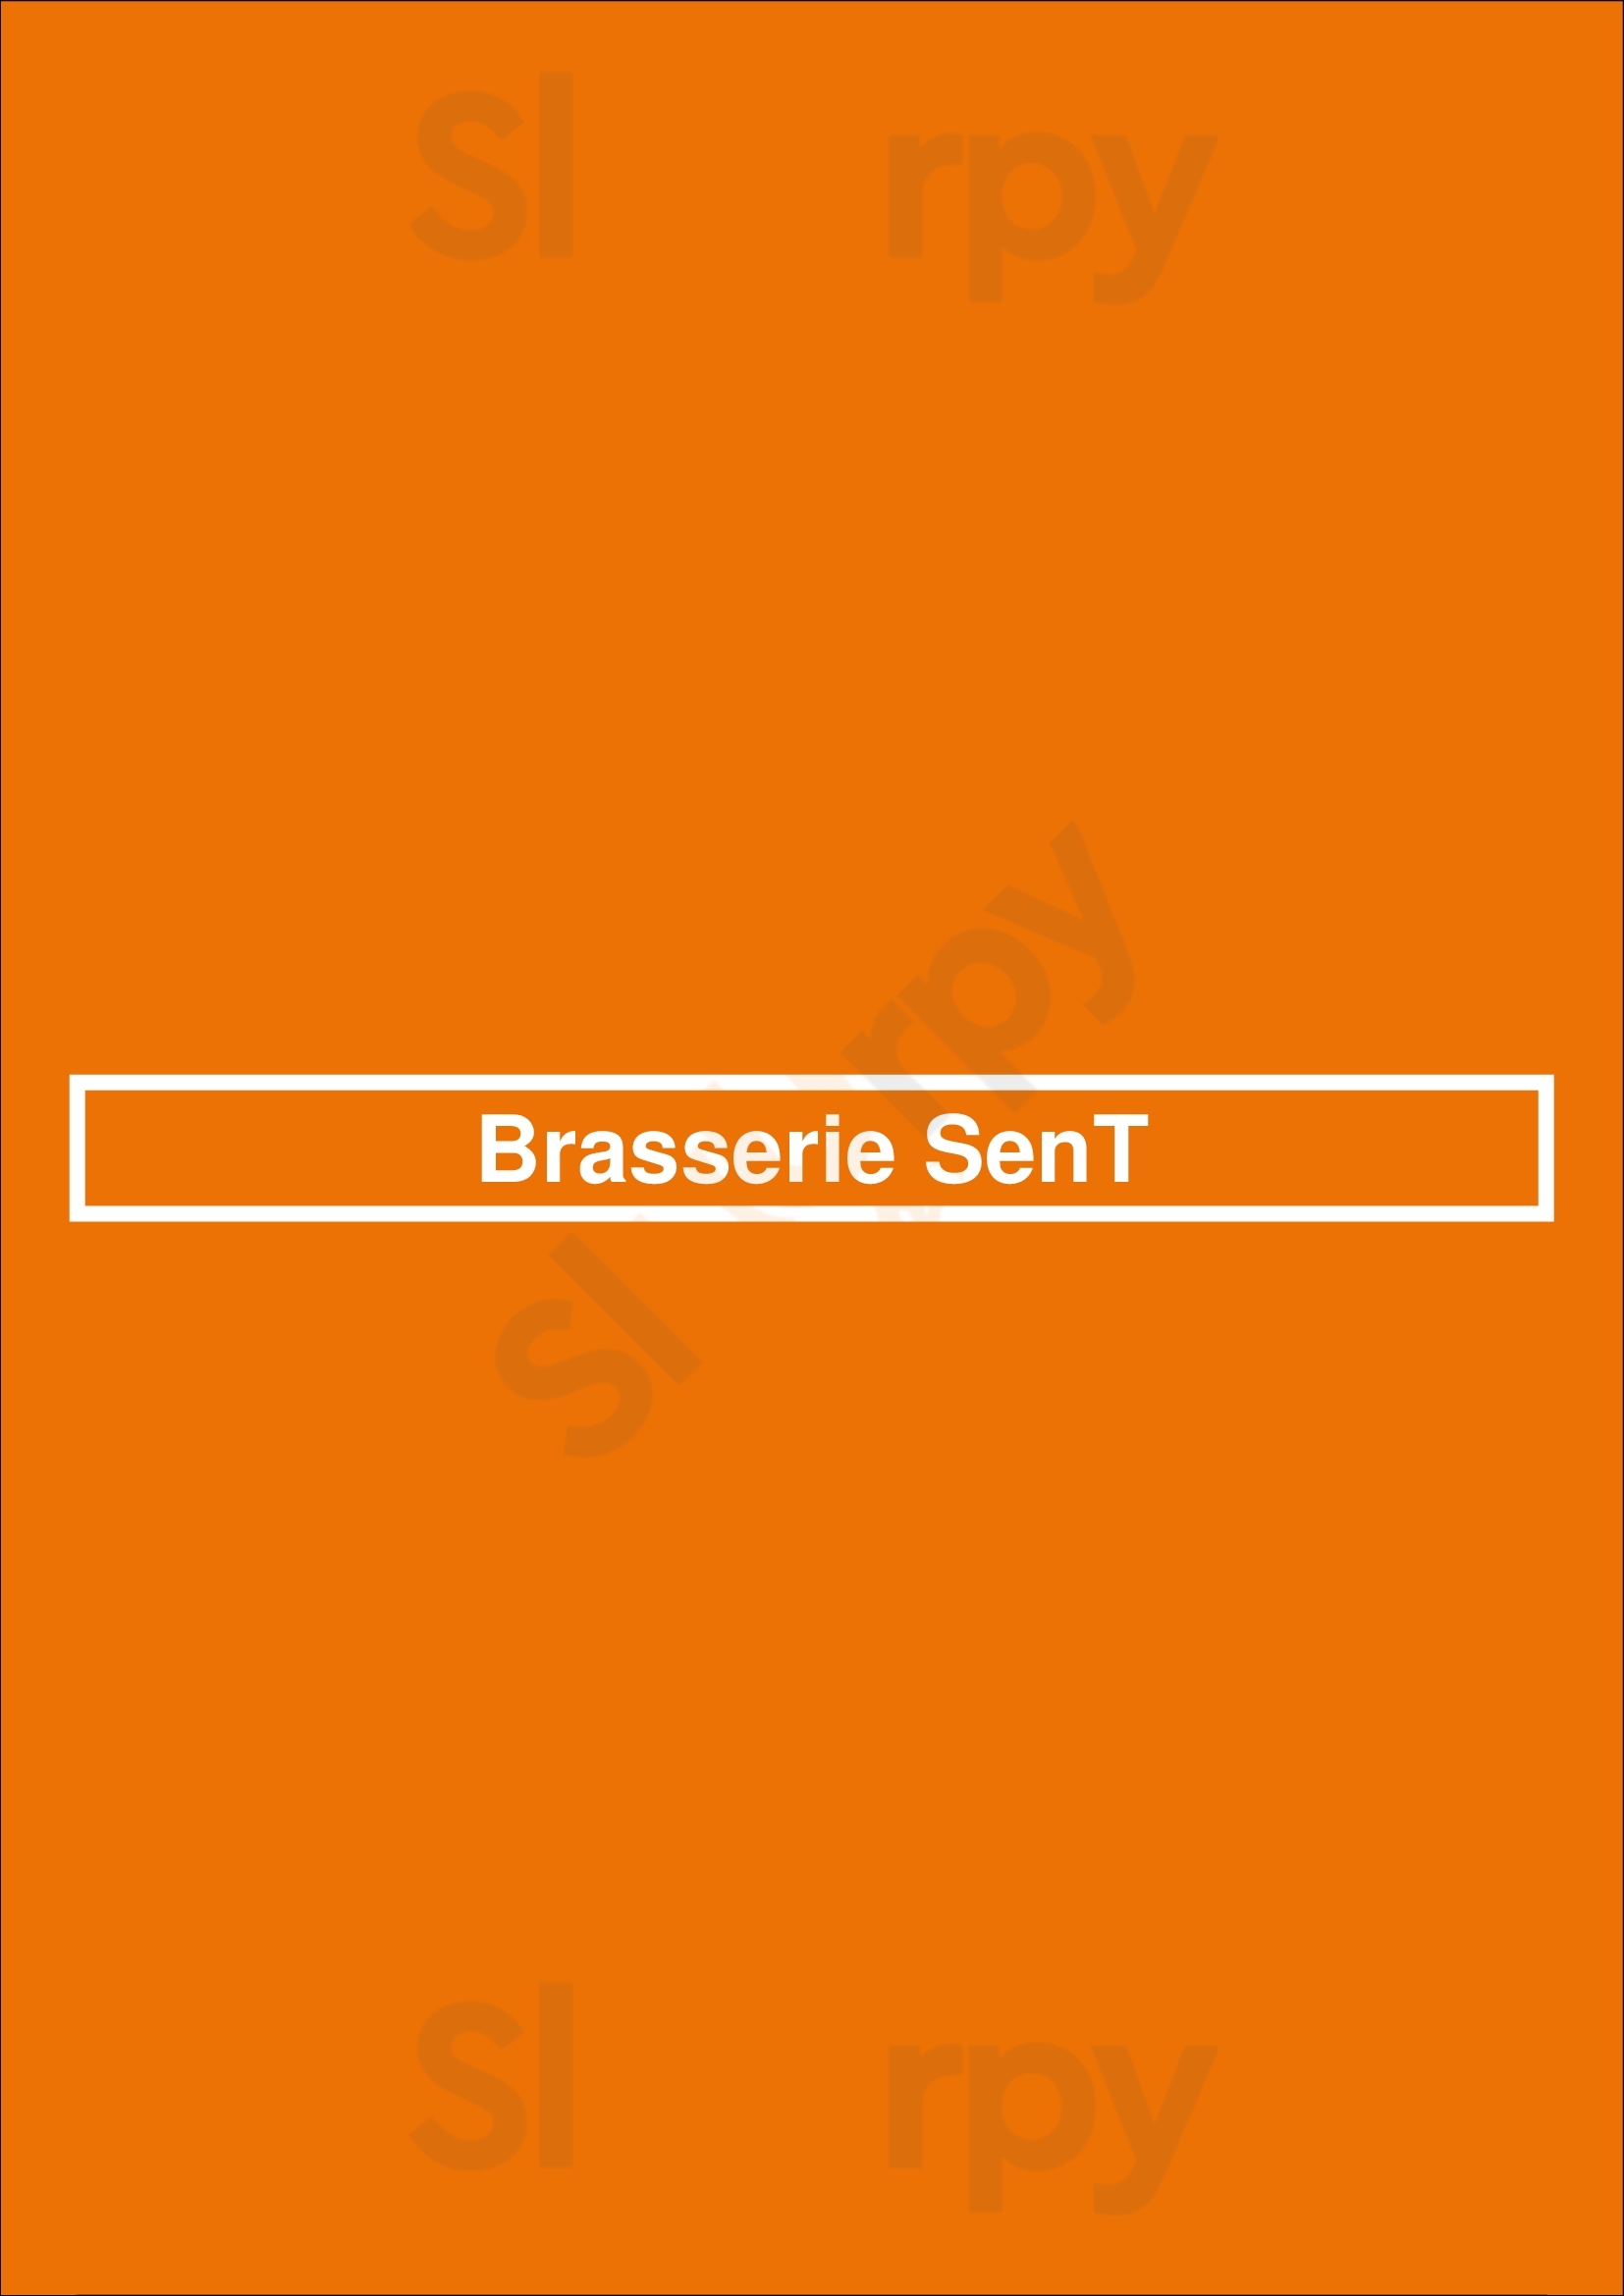 Brasserie Sent Amsterdam Menu - 1